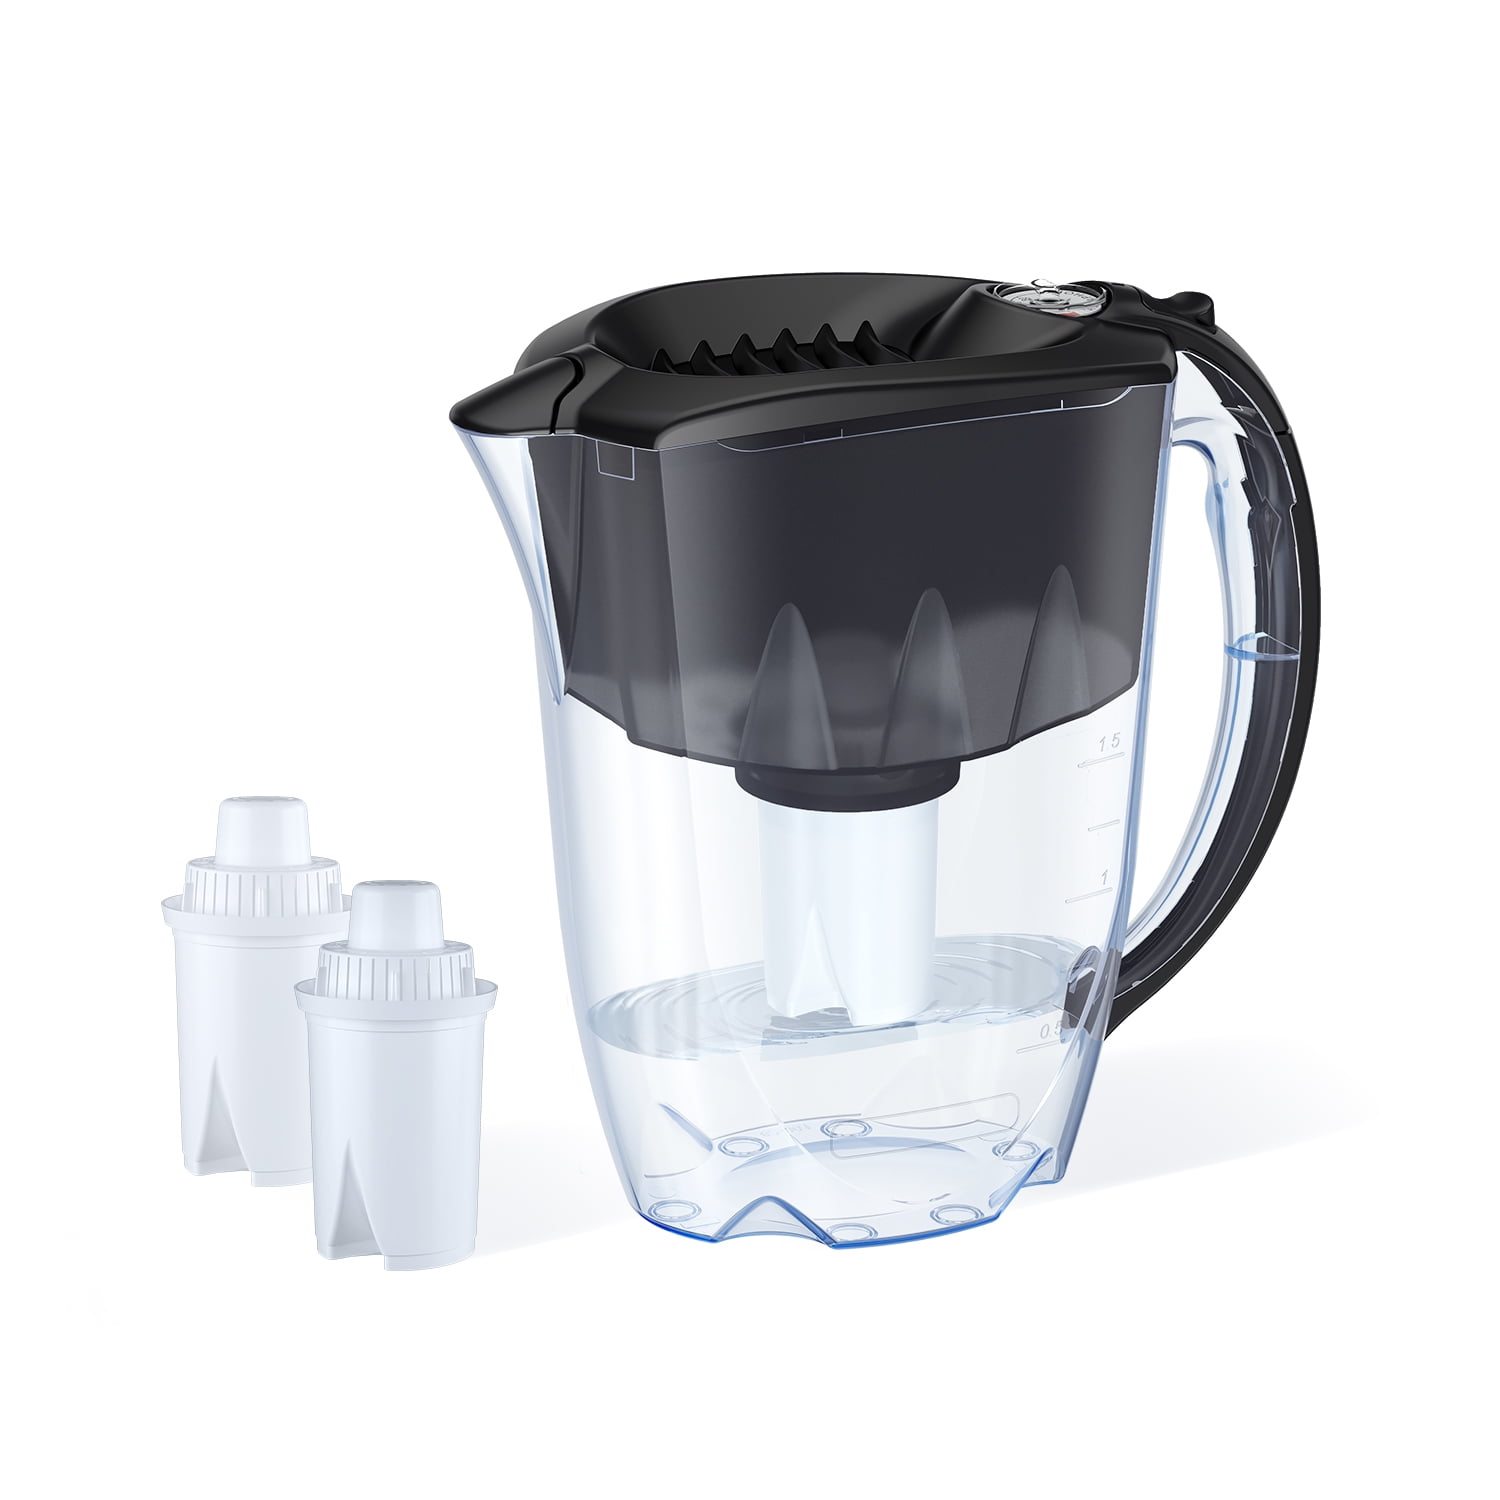 Urnex – Freez Ice Machine Cleaner – 14 oz – Goshen Coffee Roasters